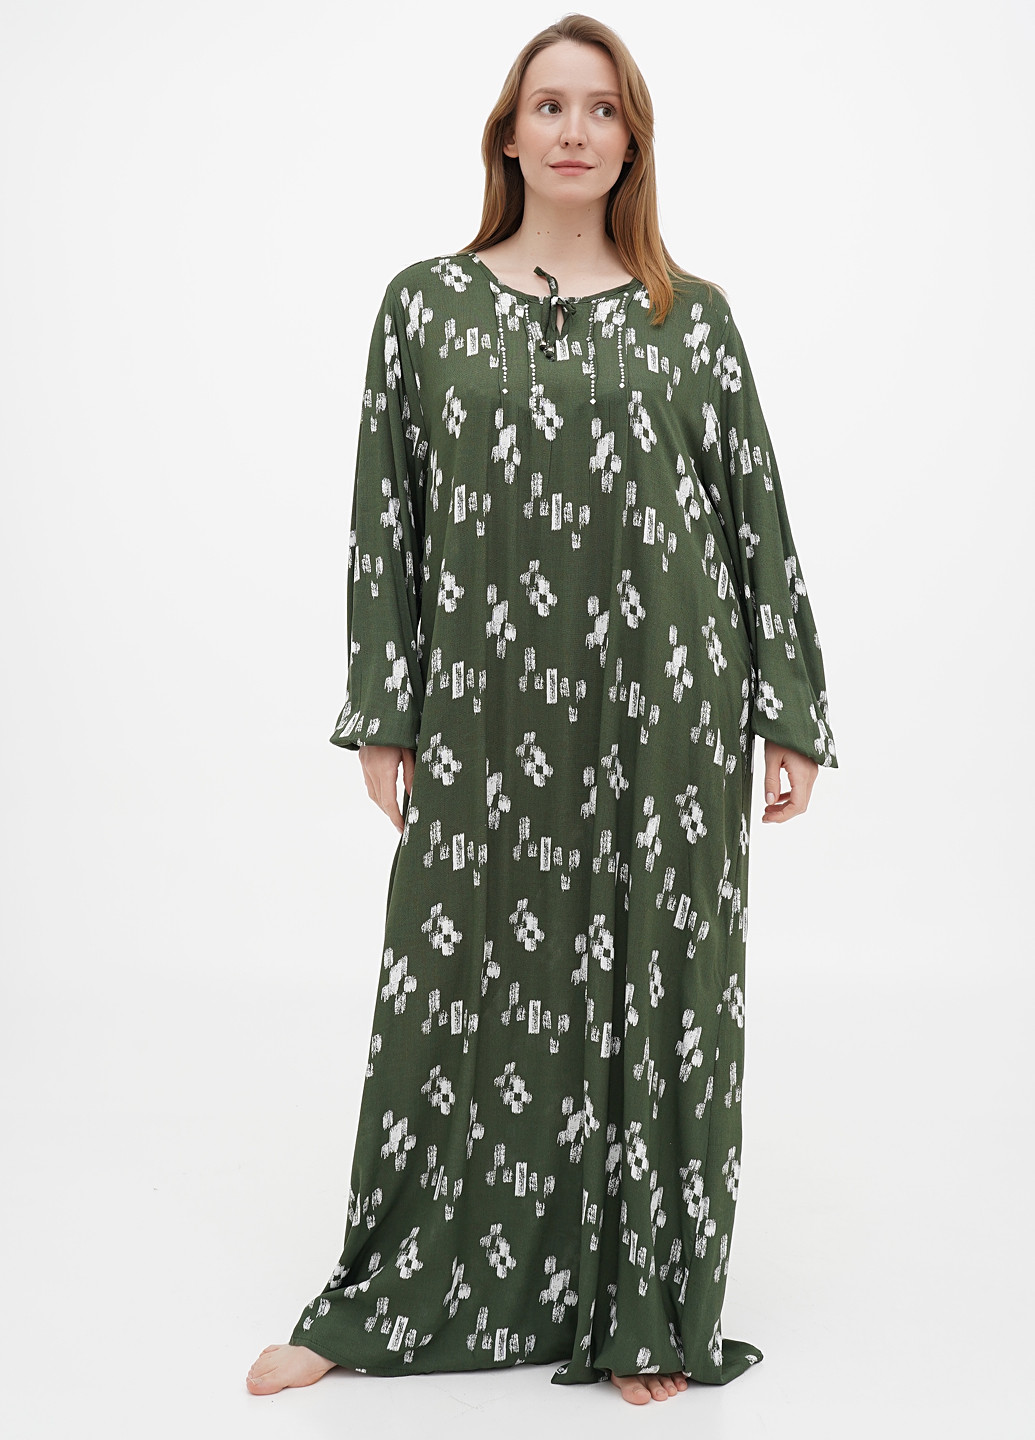 Зеленое домашнее платье Juliet deluxe с абстрактным узором